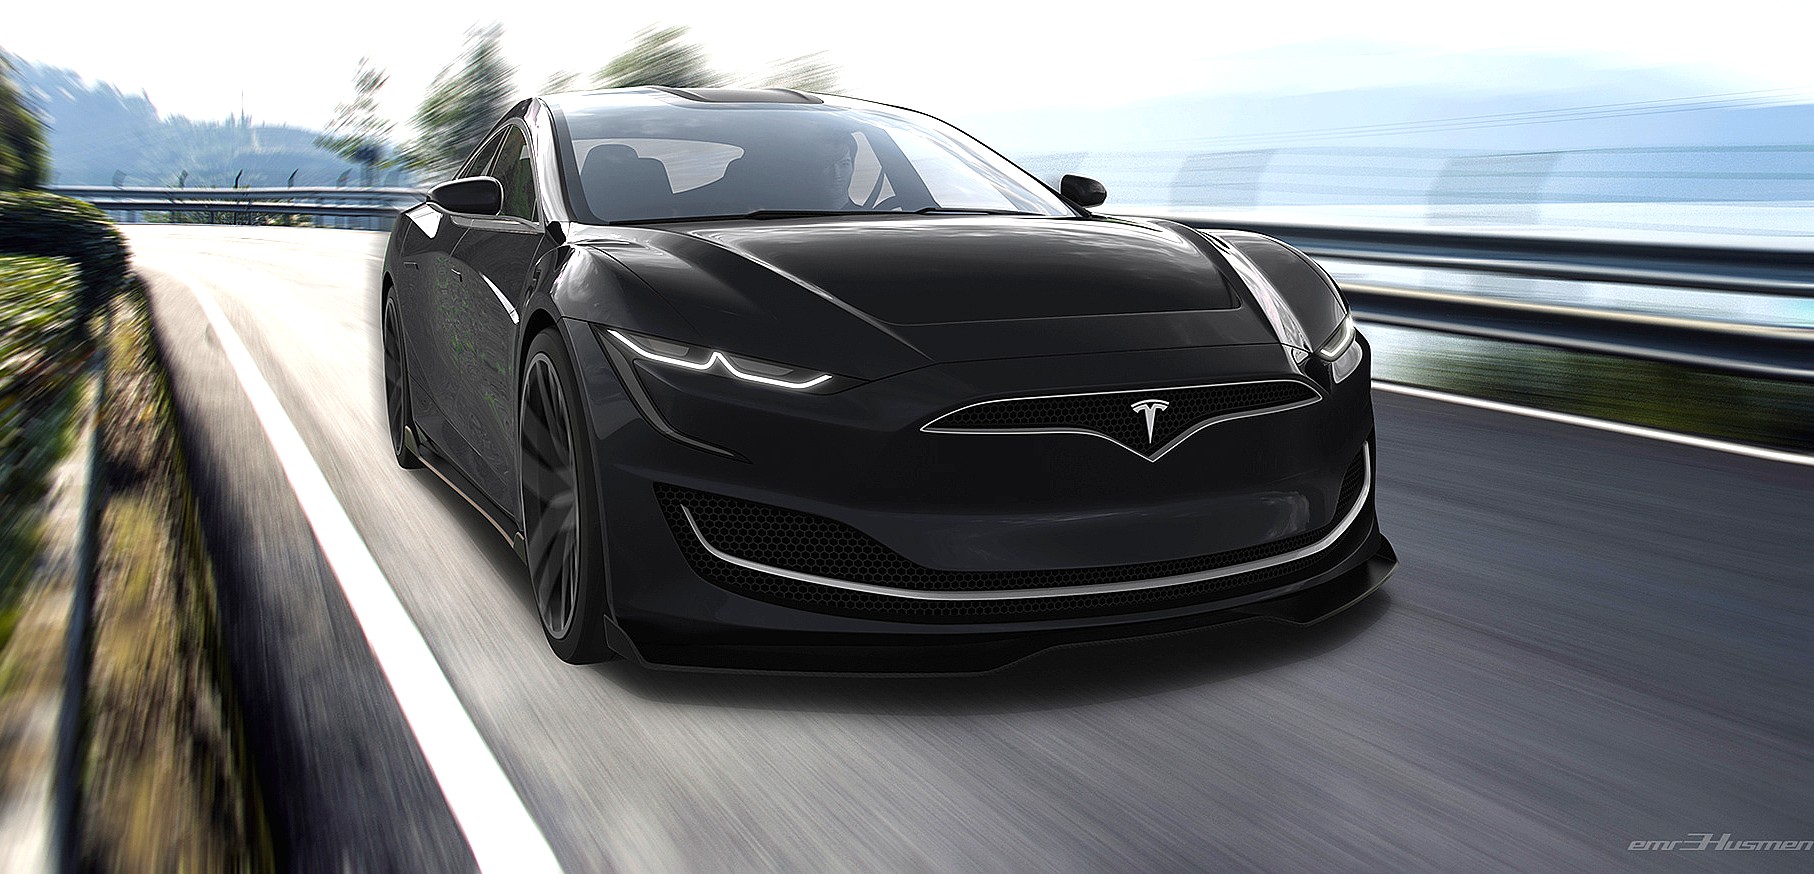 Next-gen Tesla Model S/X rumored to have 3 electric motors, 400+ mile range